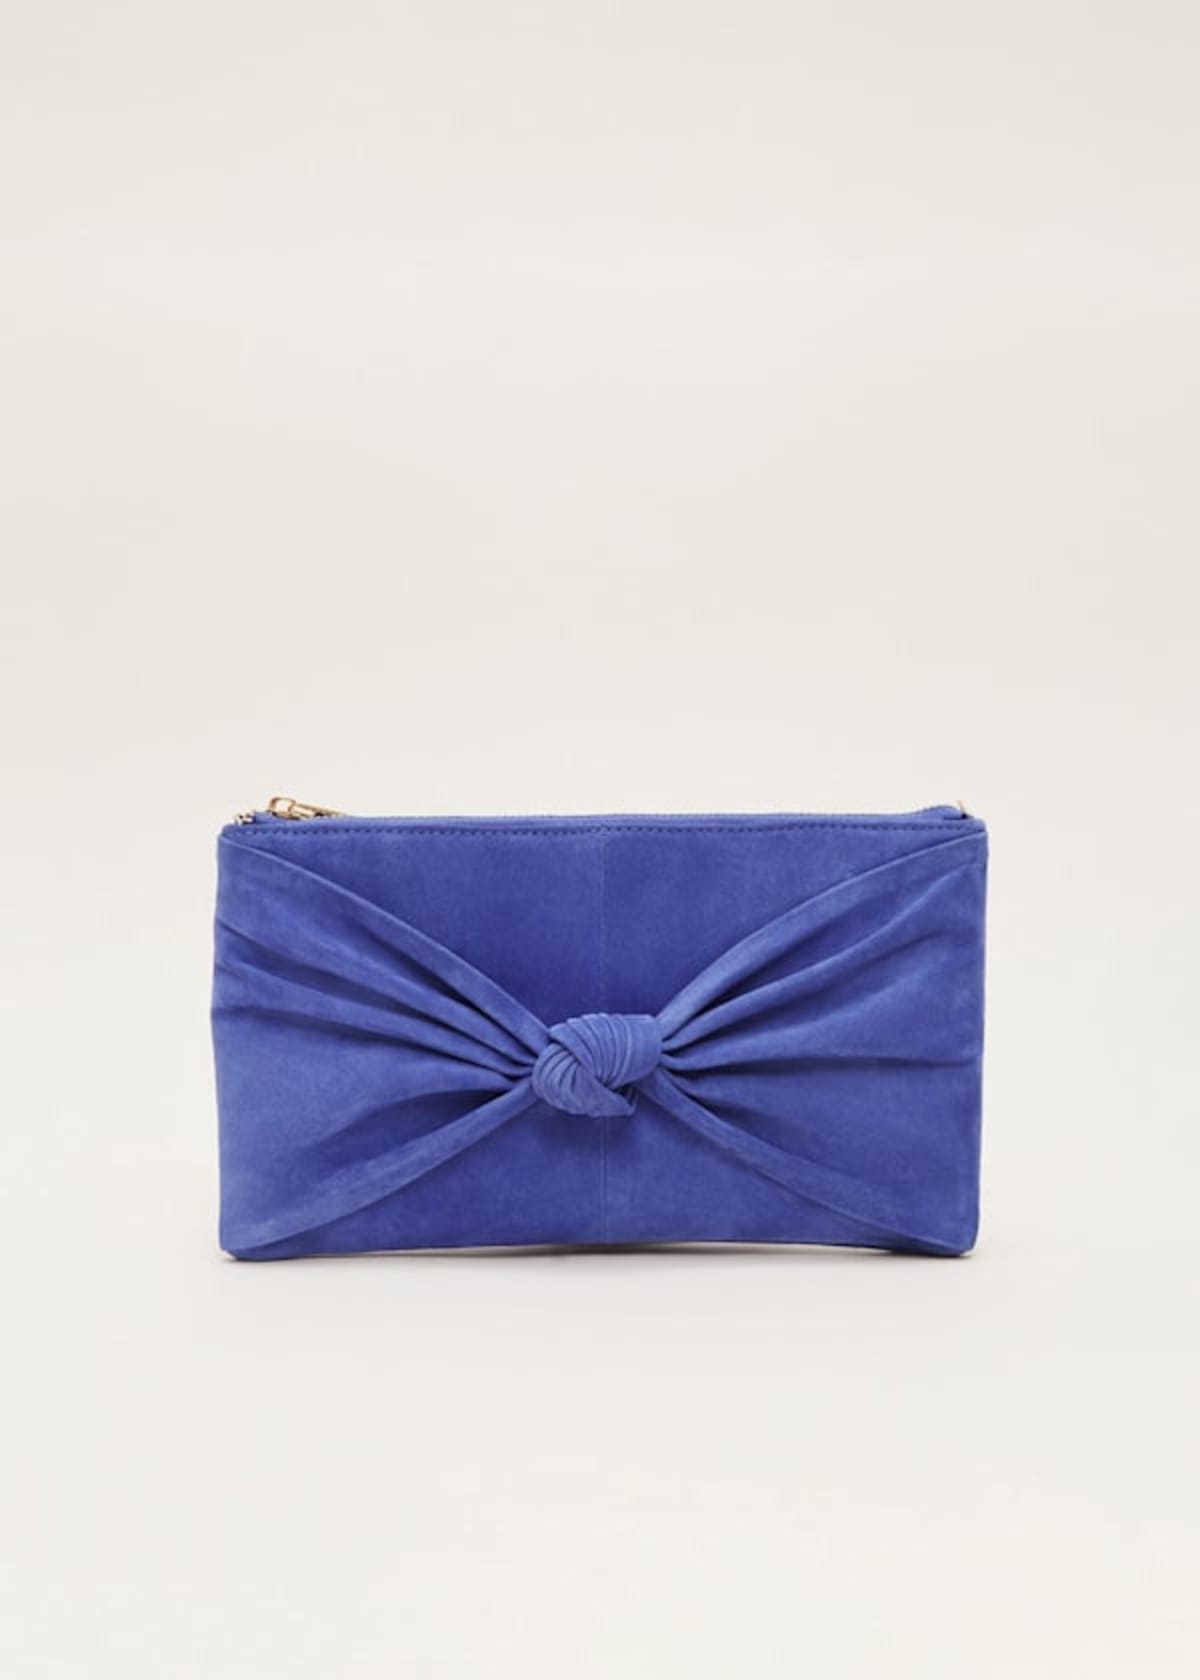 blue suede clutch bag